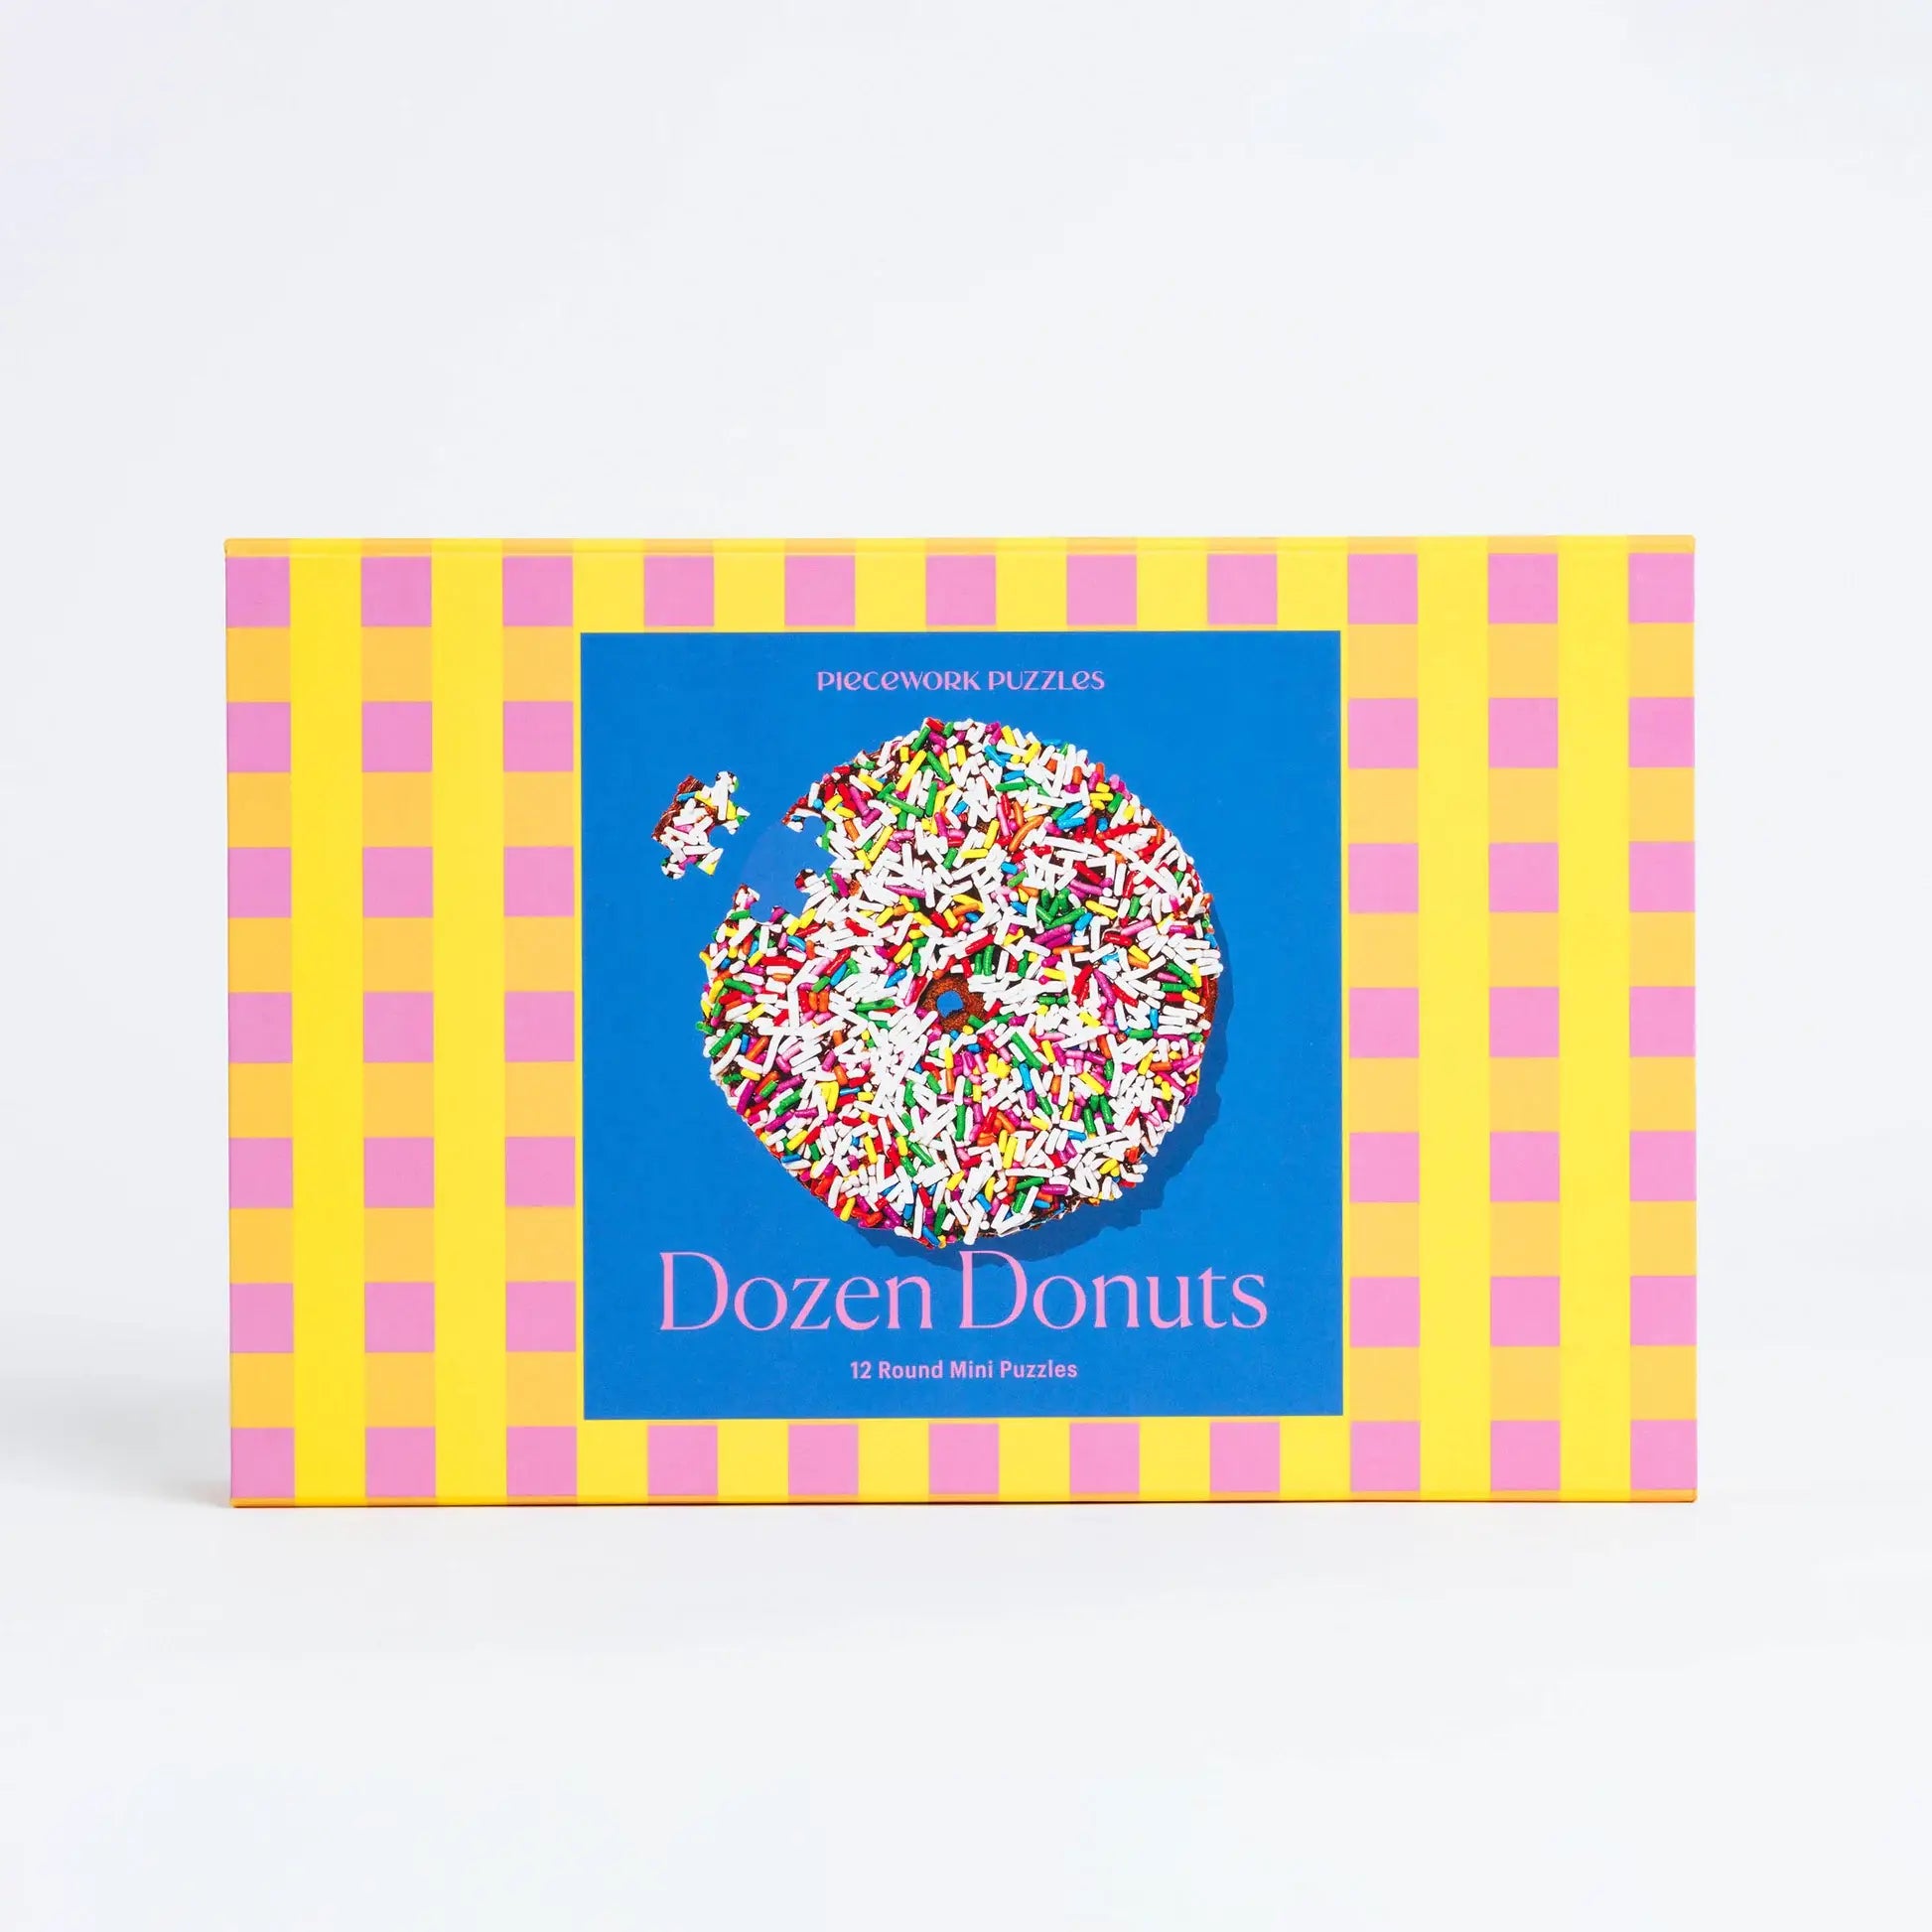 "Dozen Donuts" - 12 Round Mini Puzzles